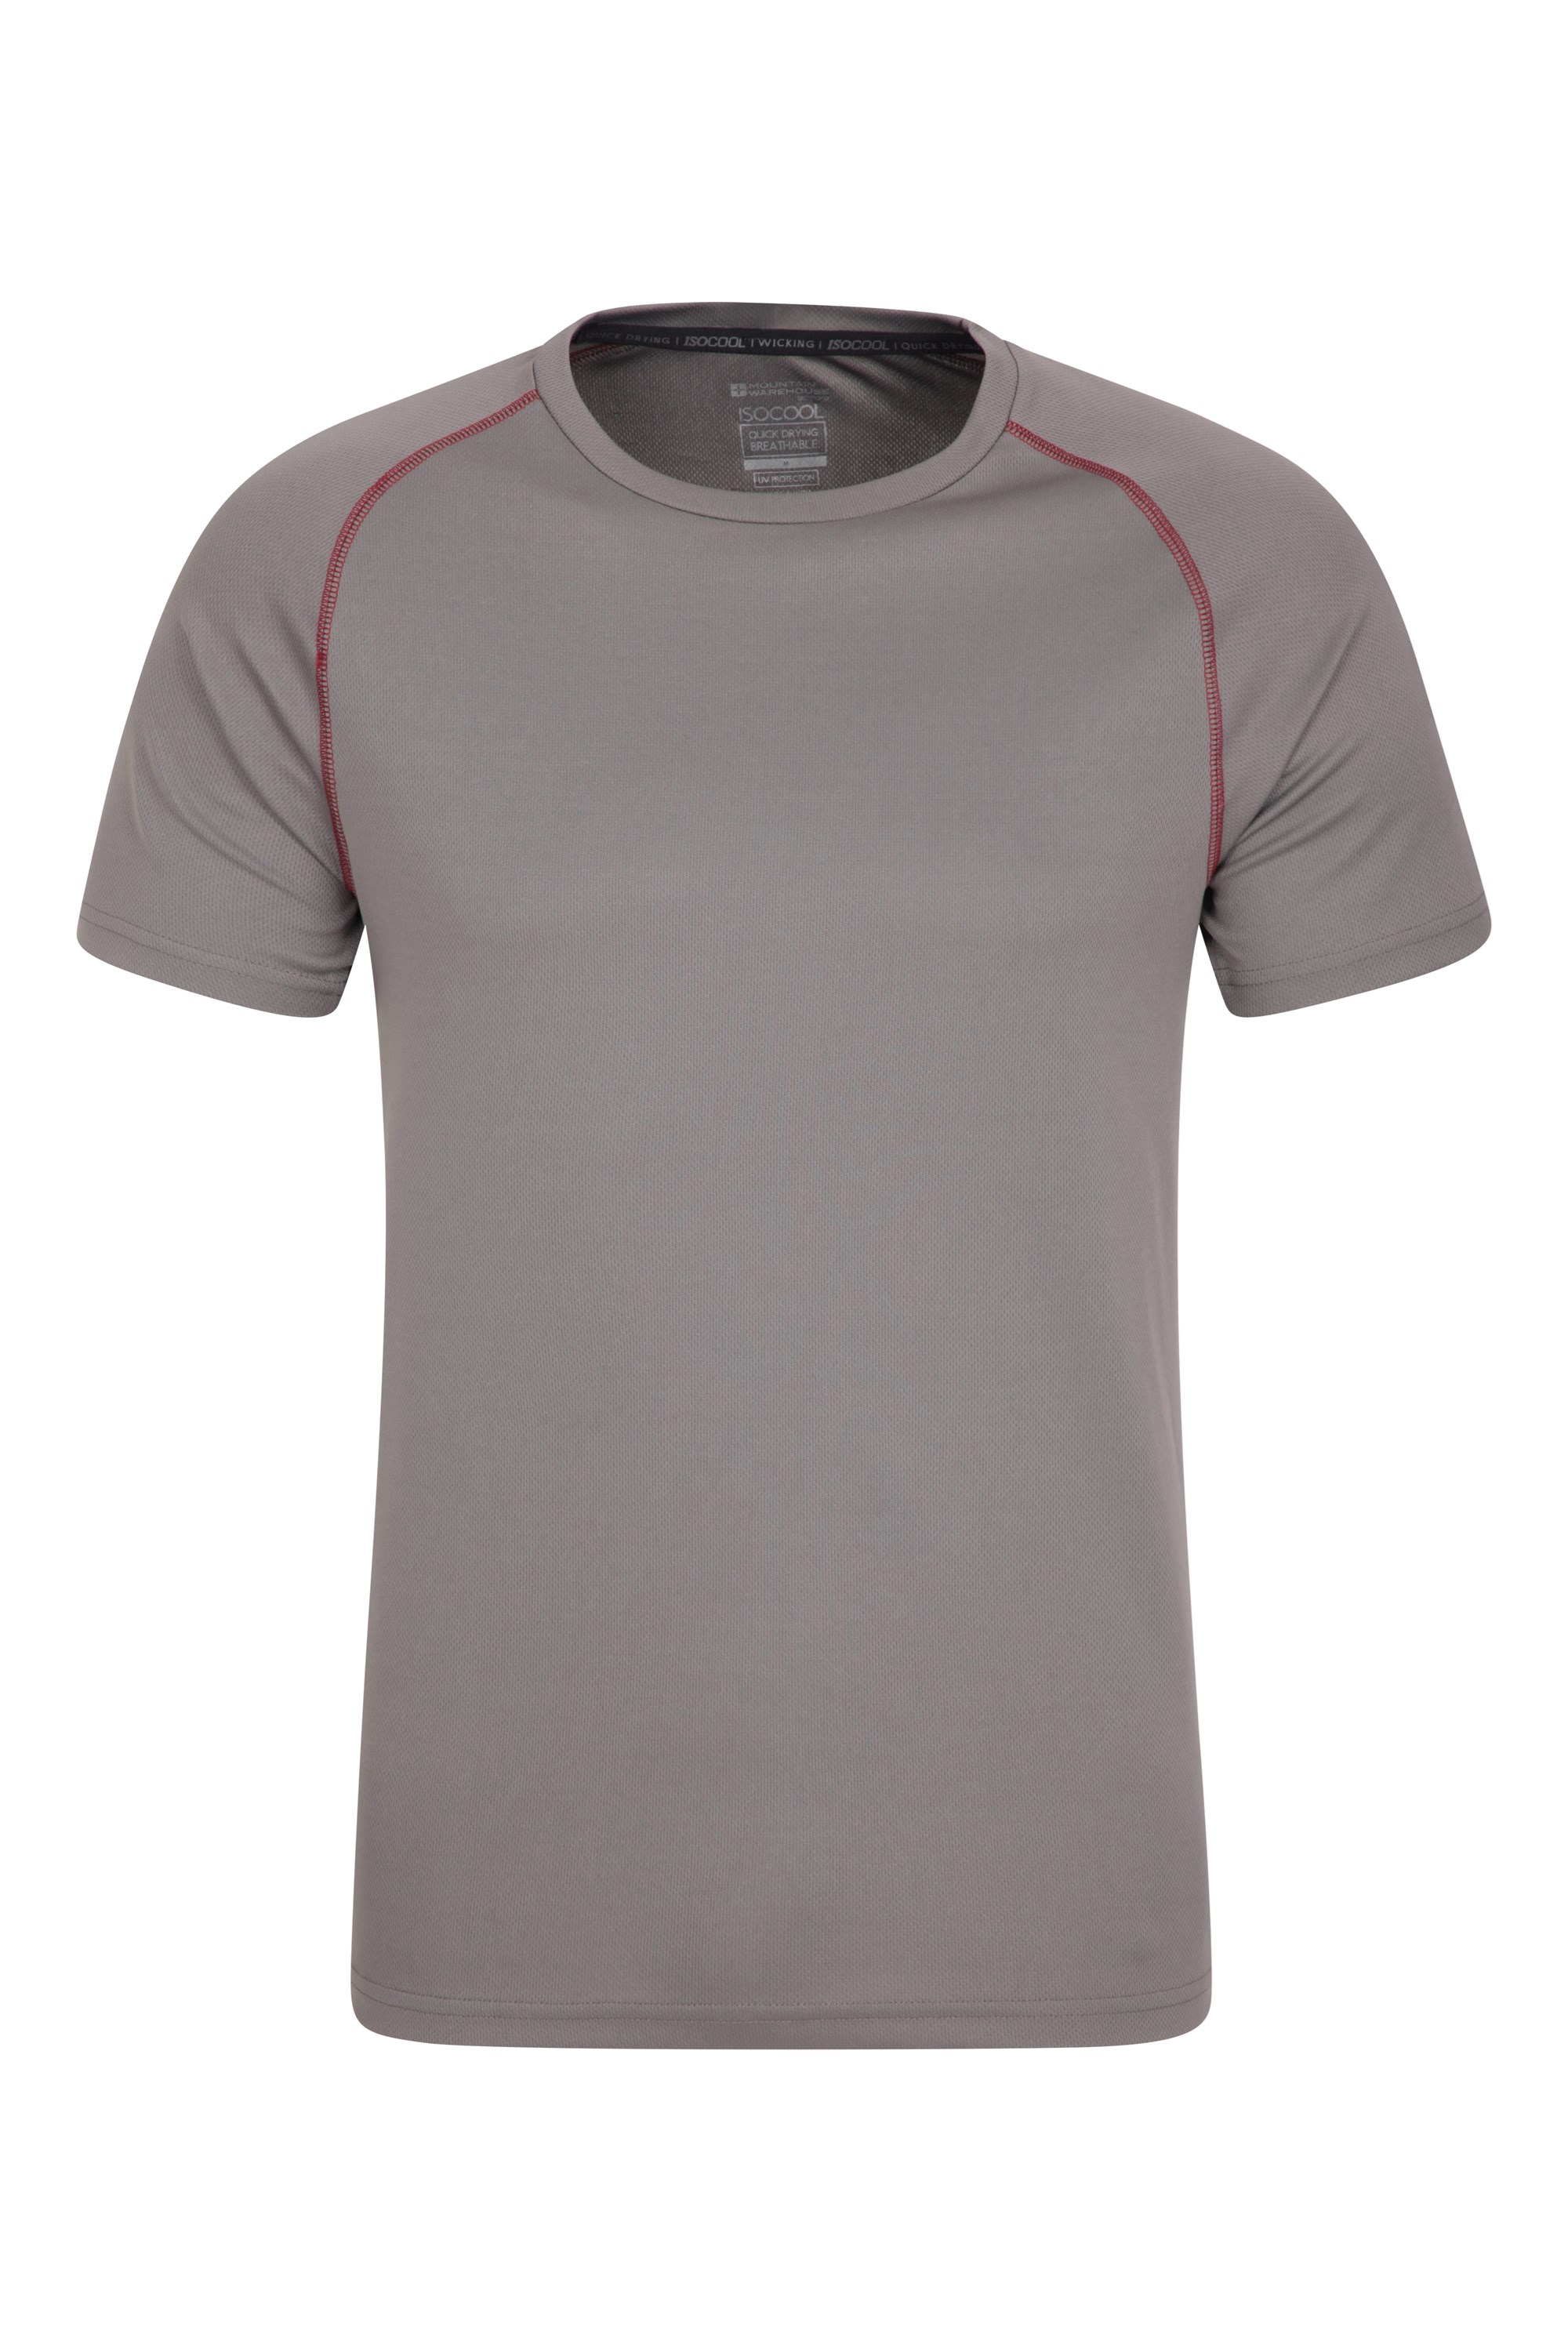 Mountain Warehouse Endurance Striped Mens T-Shirt Shirt 